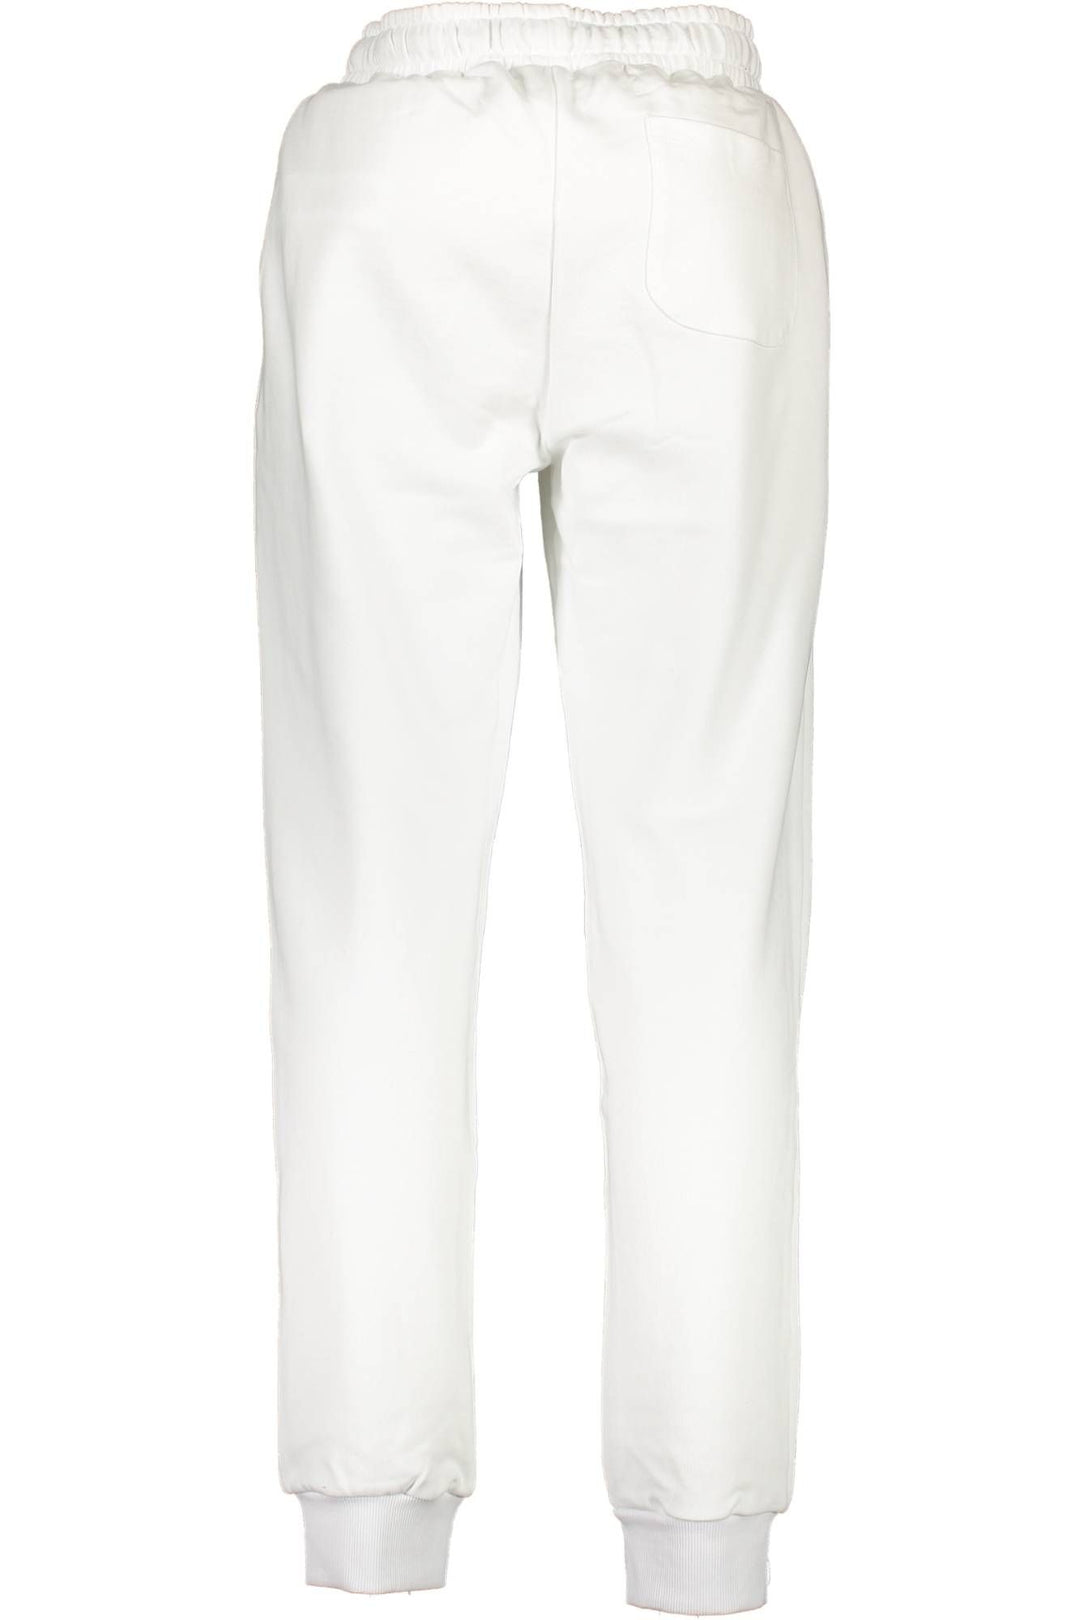 La Martina White Cotton Jeans & Pant